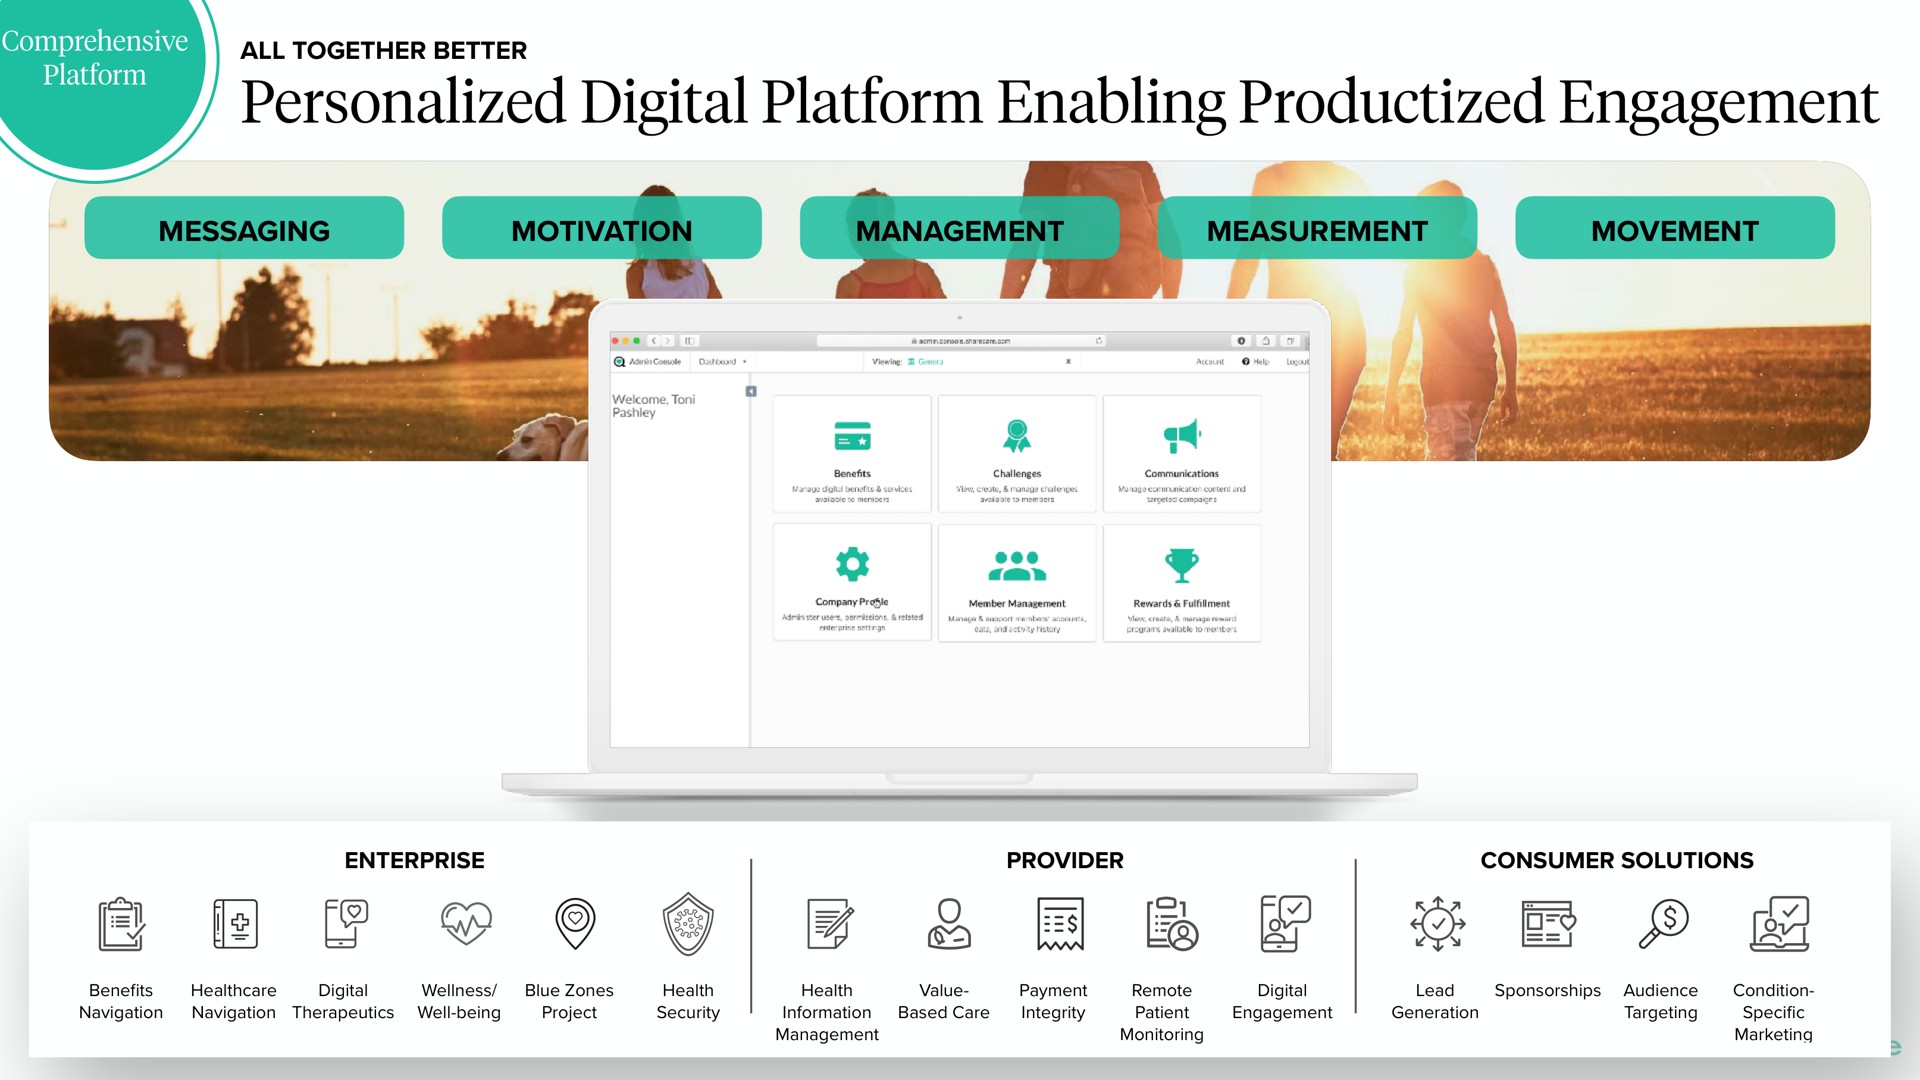 personalized digital platform enabling engagement if | Sharecare